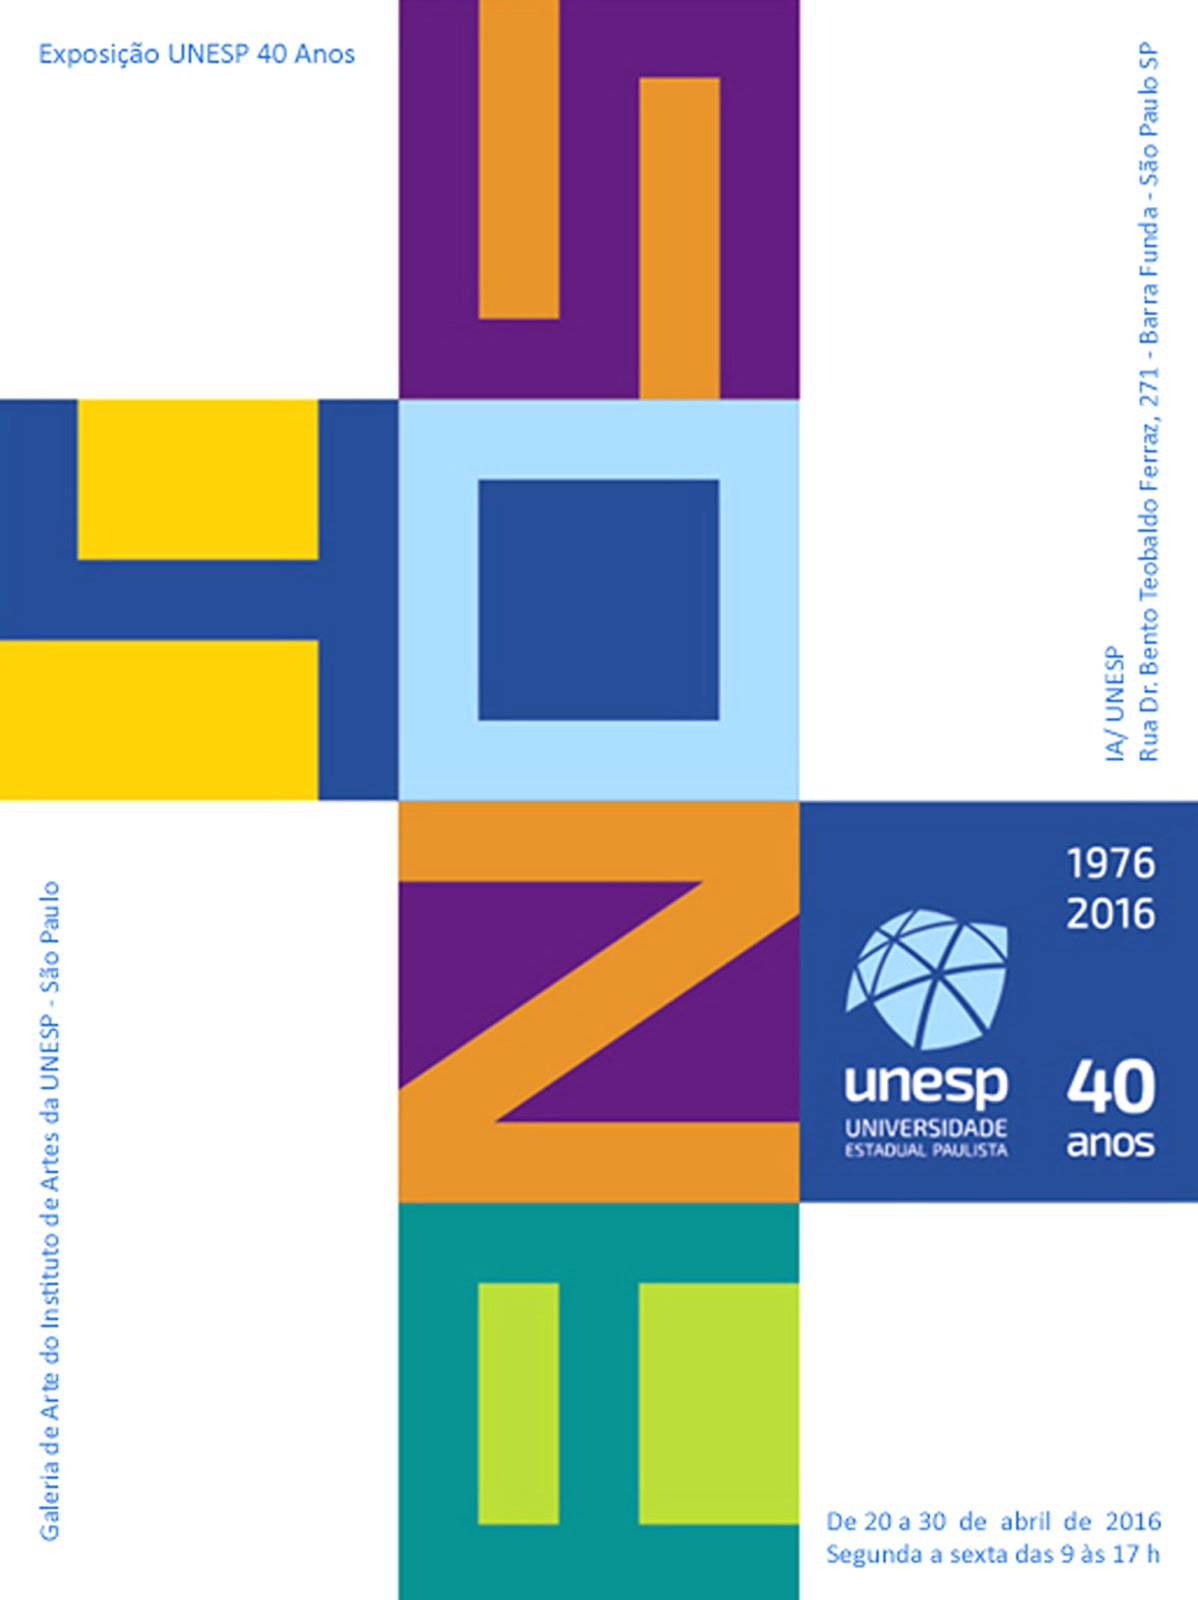 Coletiva 40 anos IA/UNESP 2016